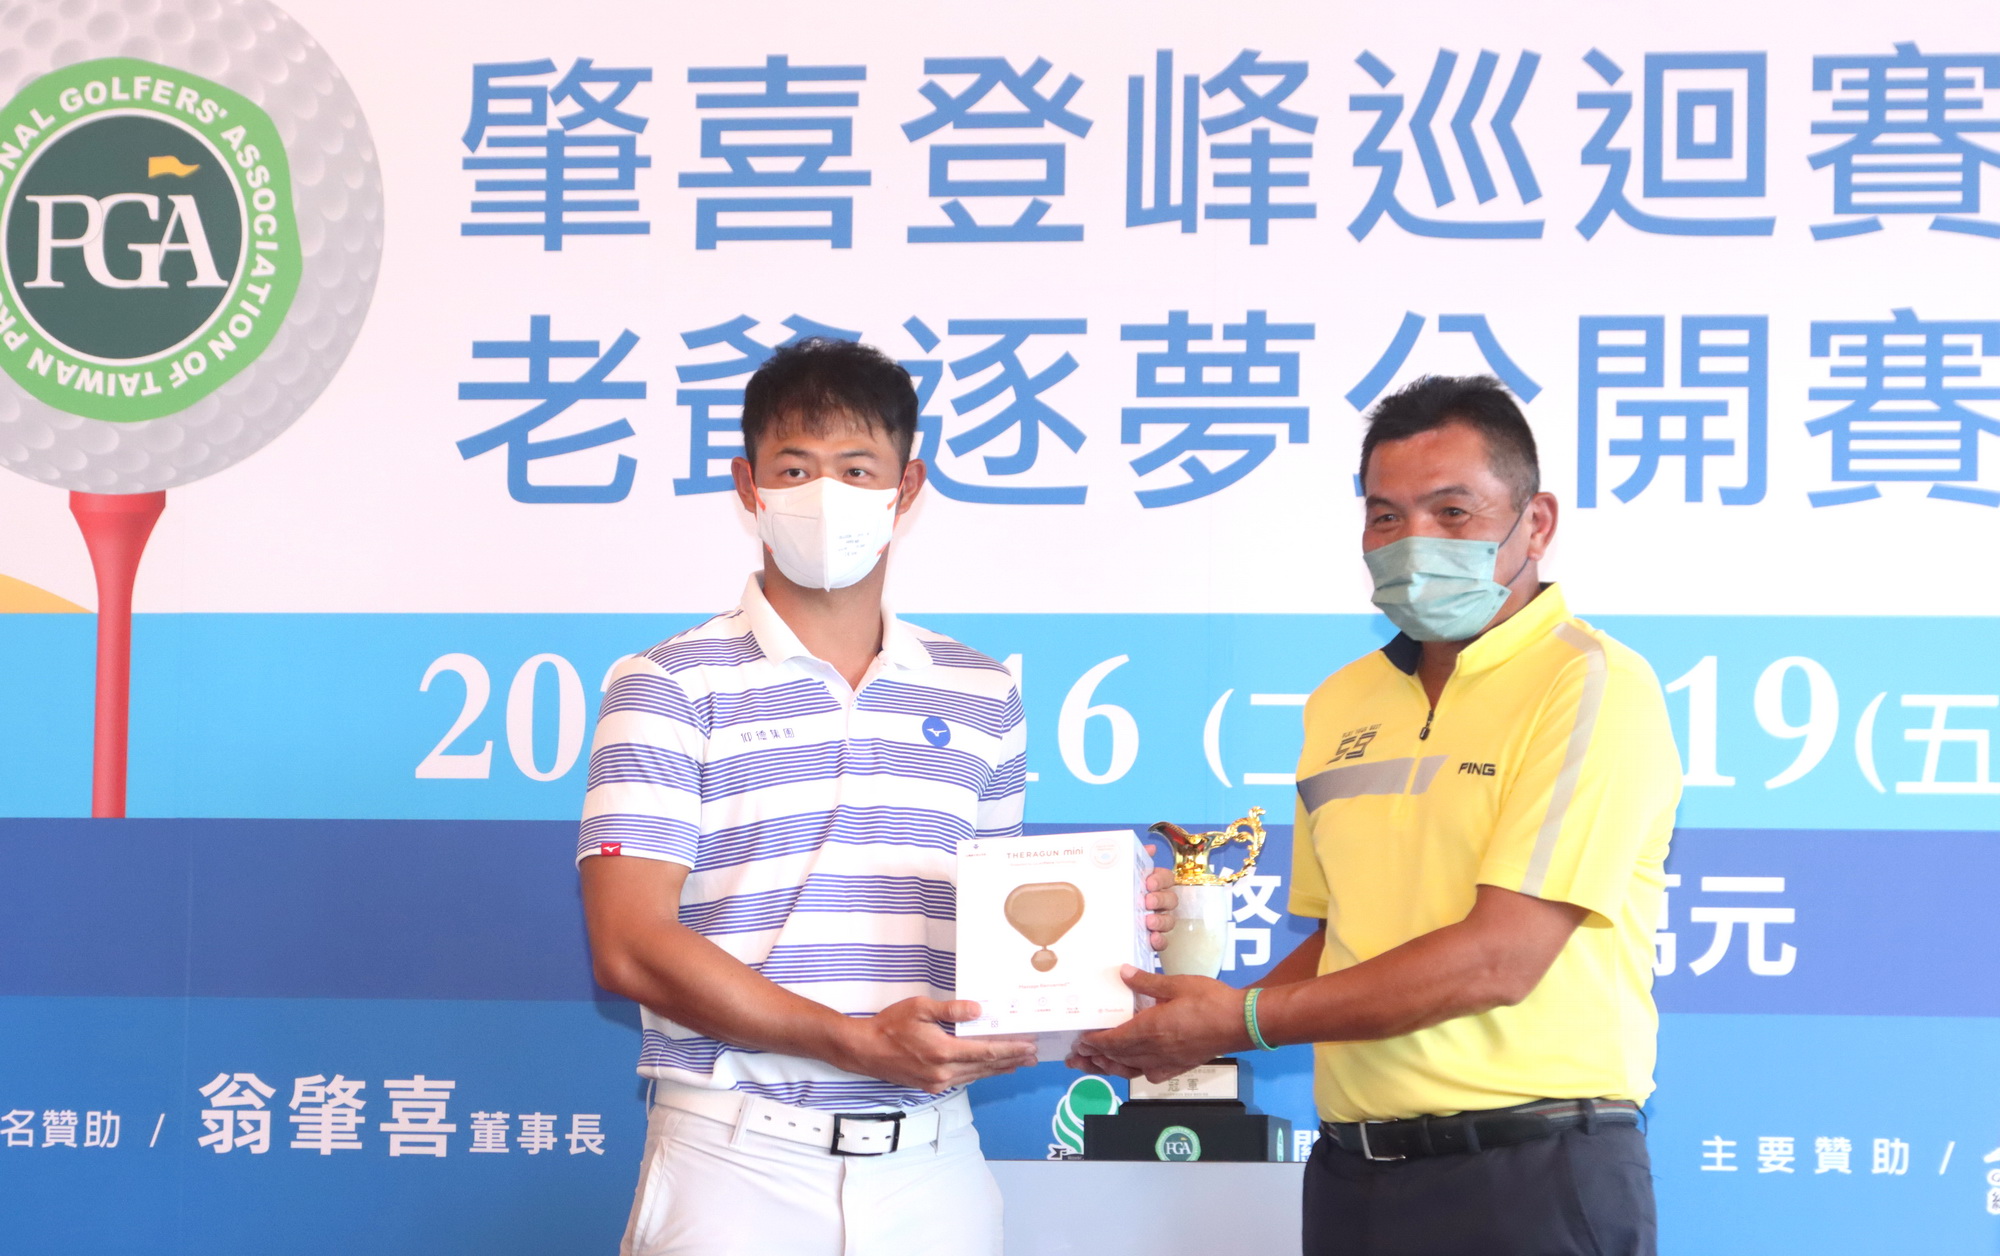 TPGA副理事長楊文來(右)頒二近洞獎品給方胤人。鍾豐榮攝影